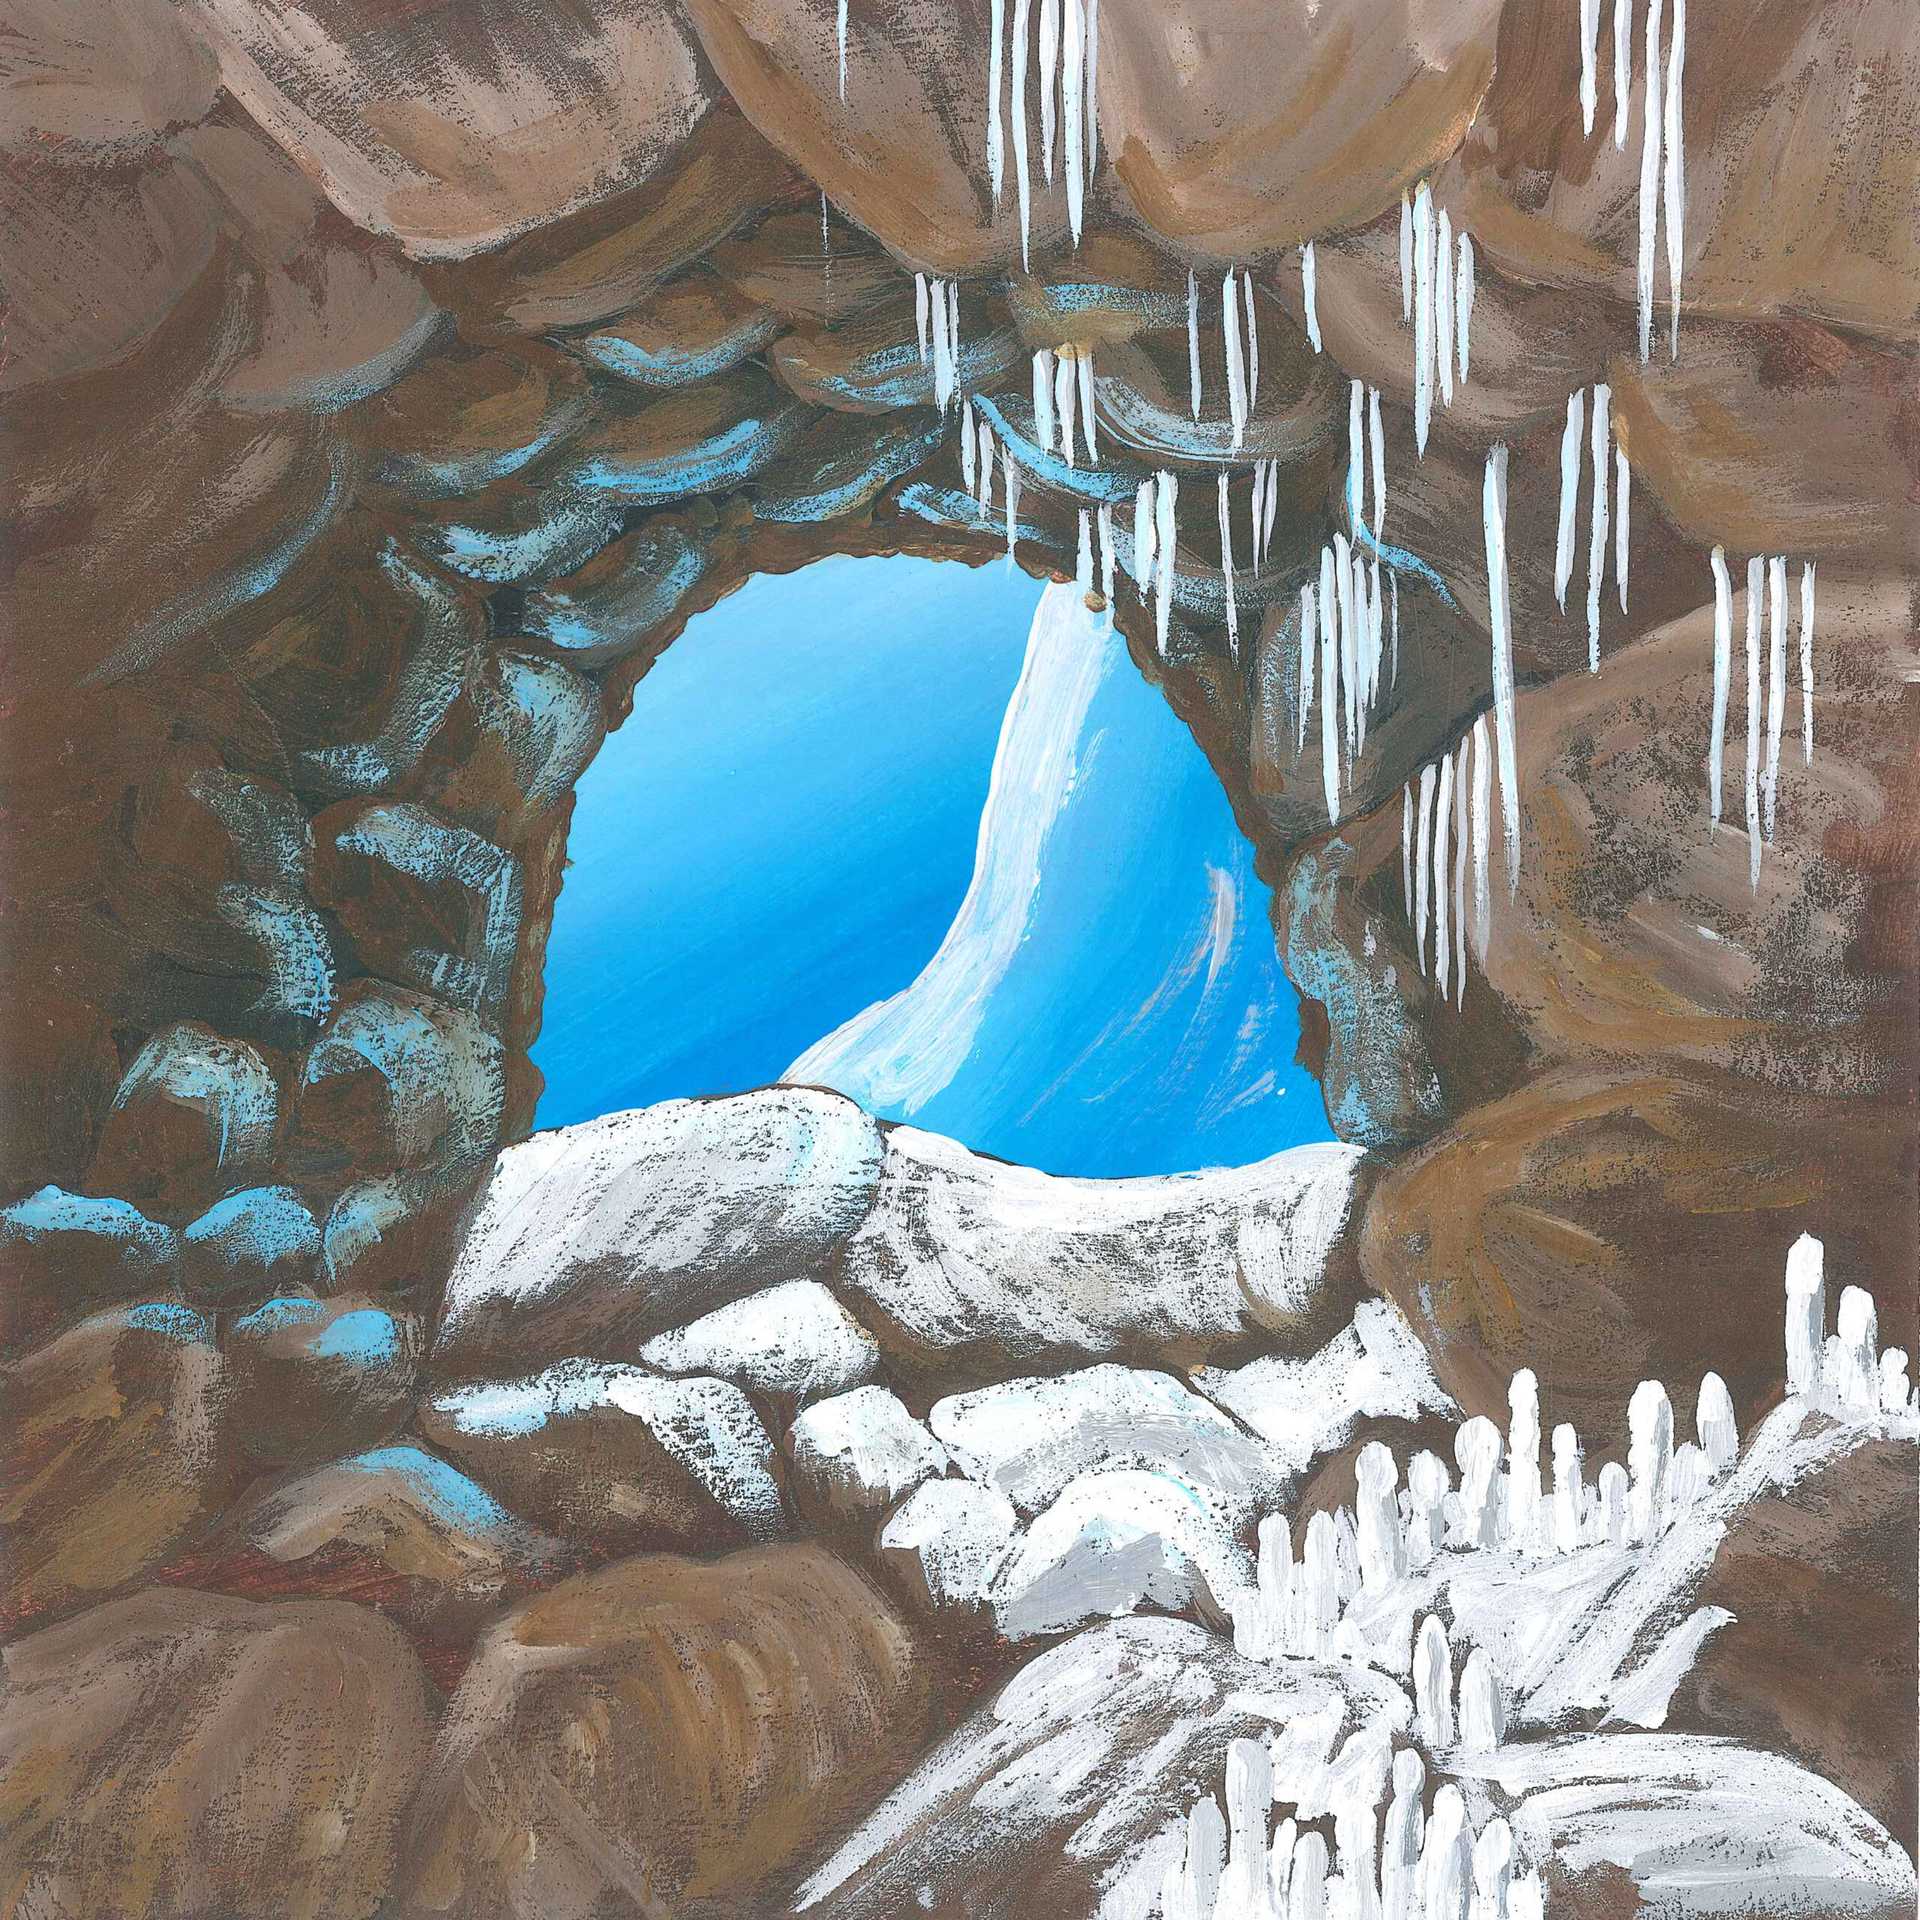 Water Drops in a Lava Cave - earth.fm